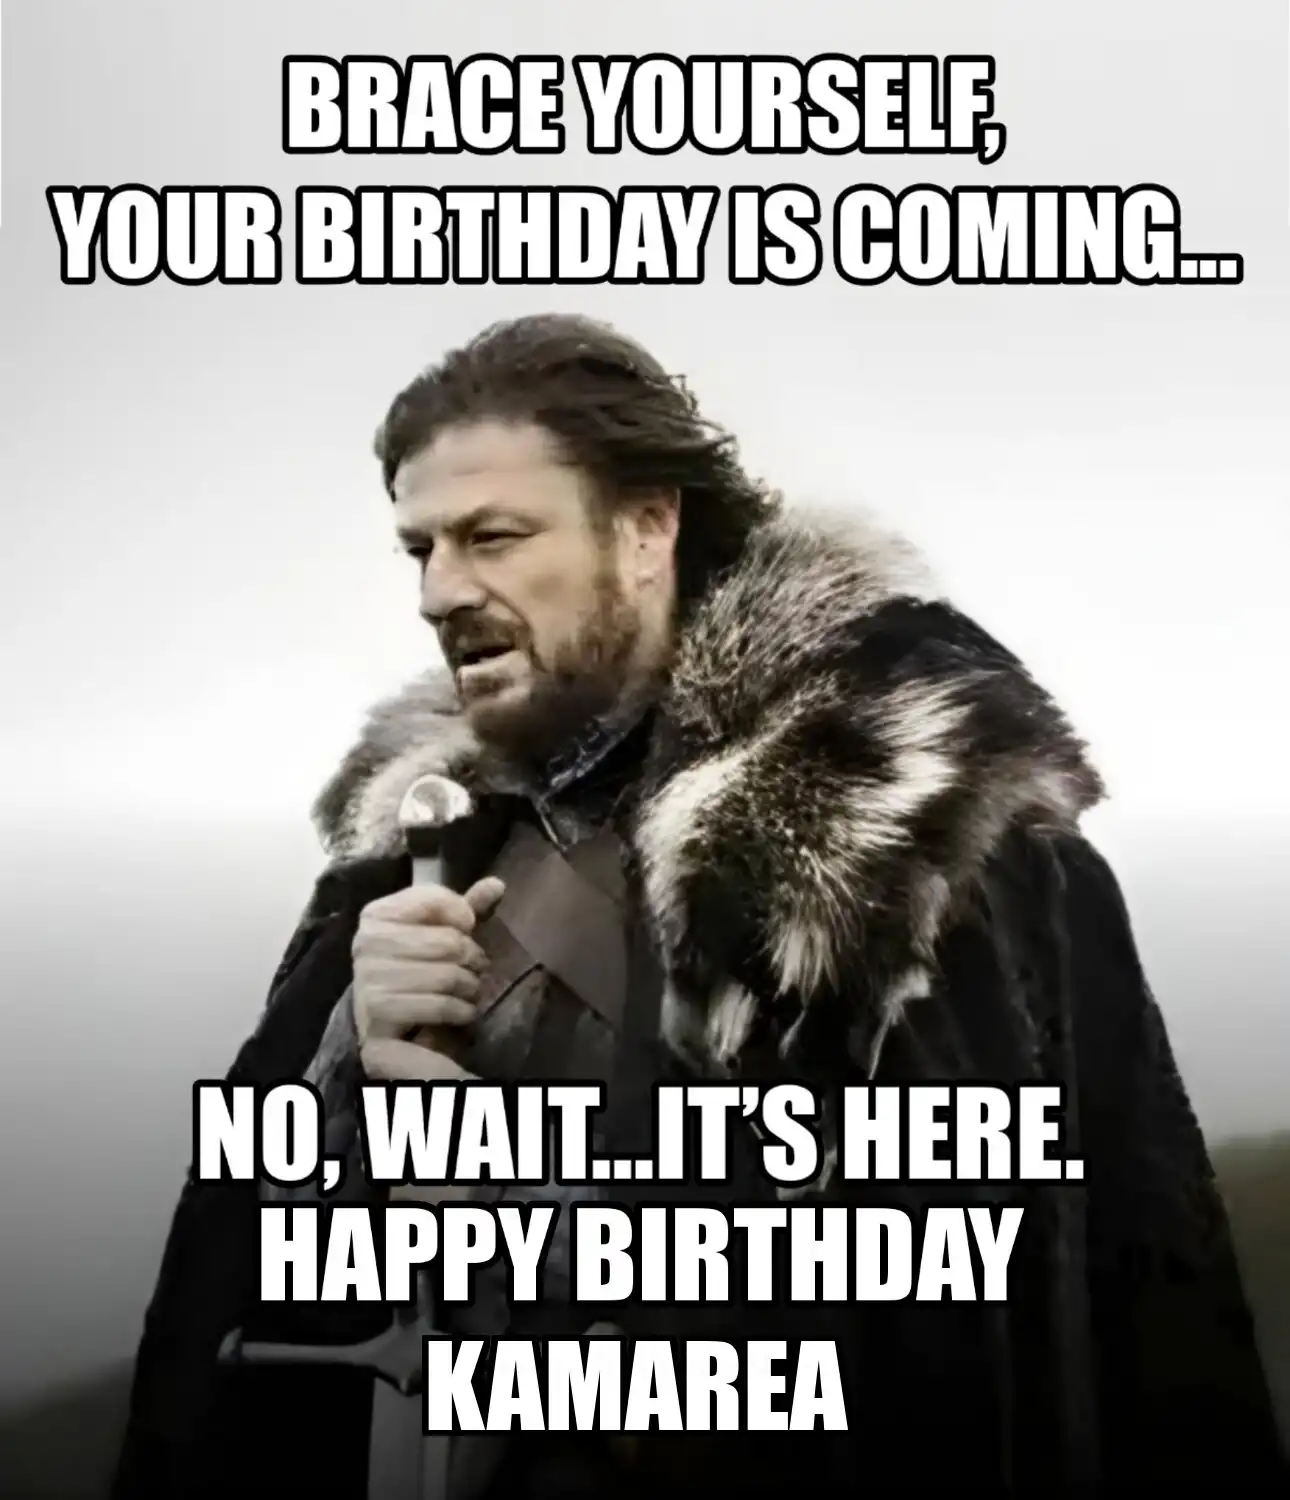 Happy Birthday Kamarea Brace Yourself Your Birthday Is Coming Meme